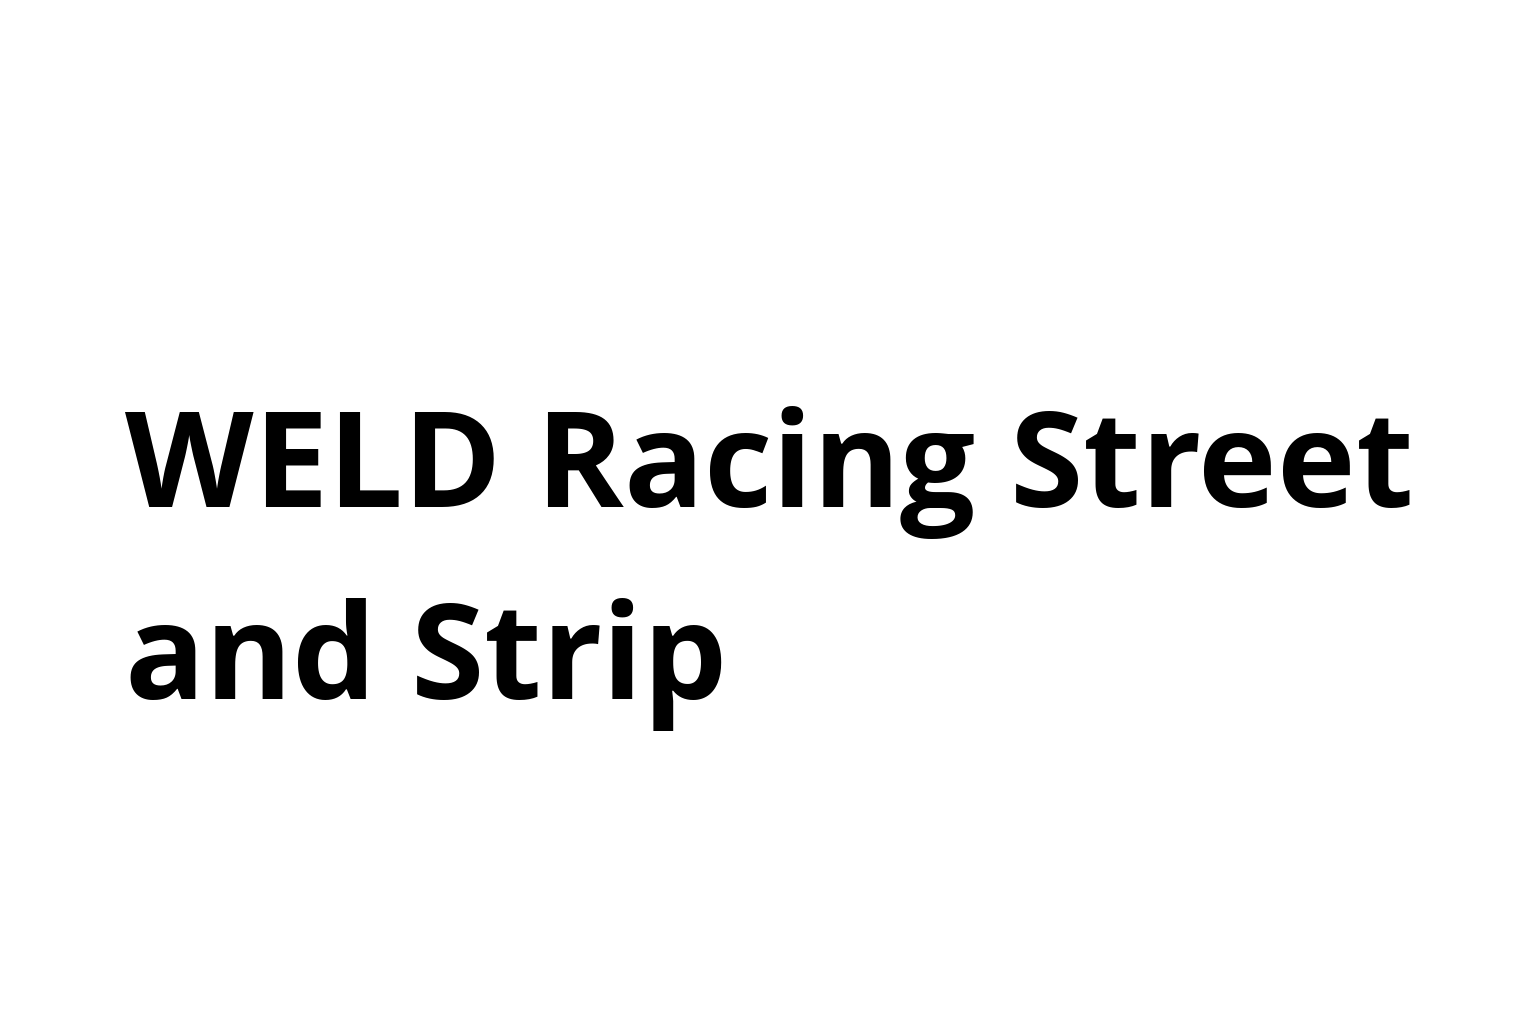 WELD Racing Street and Strip